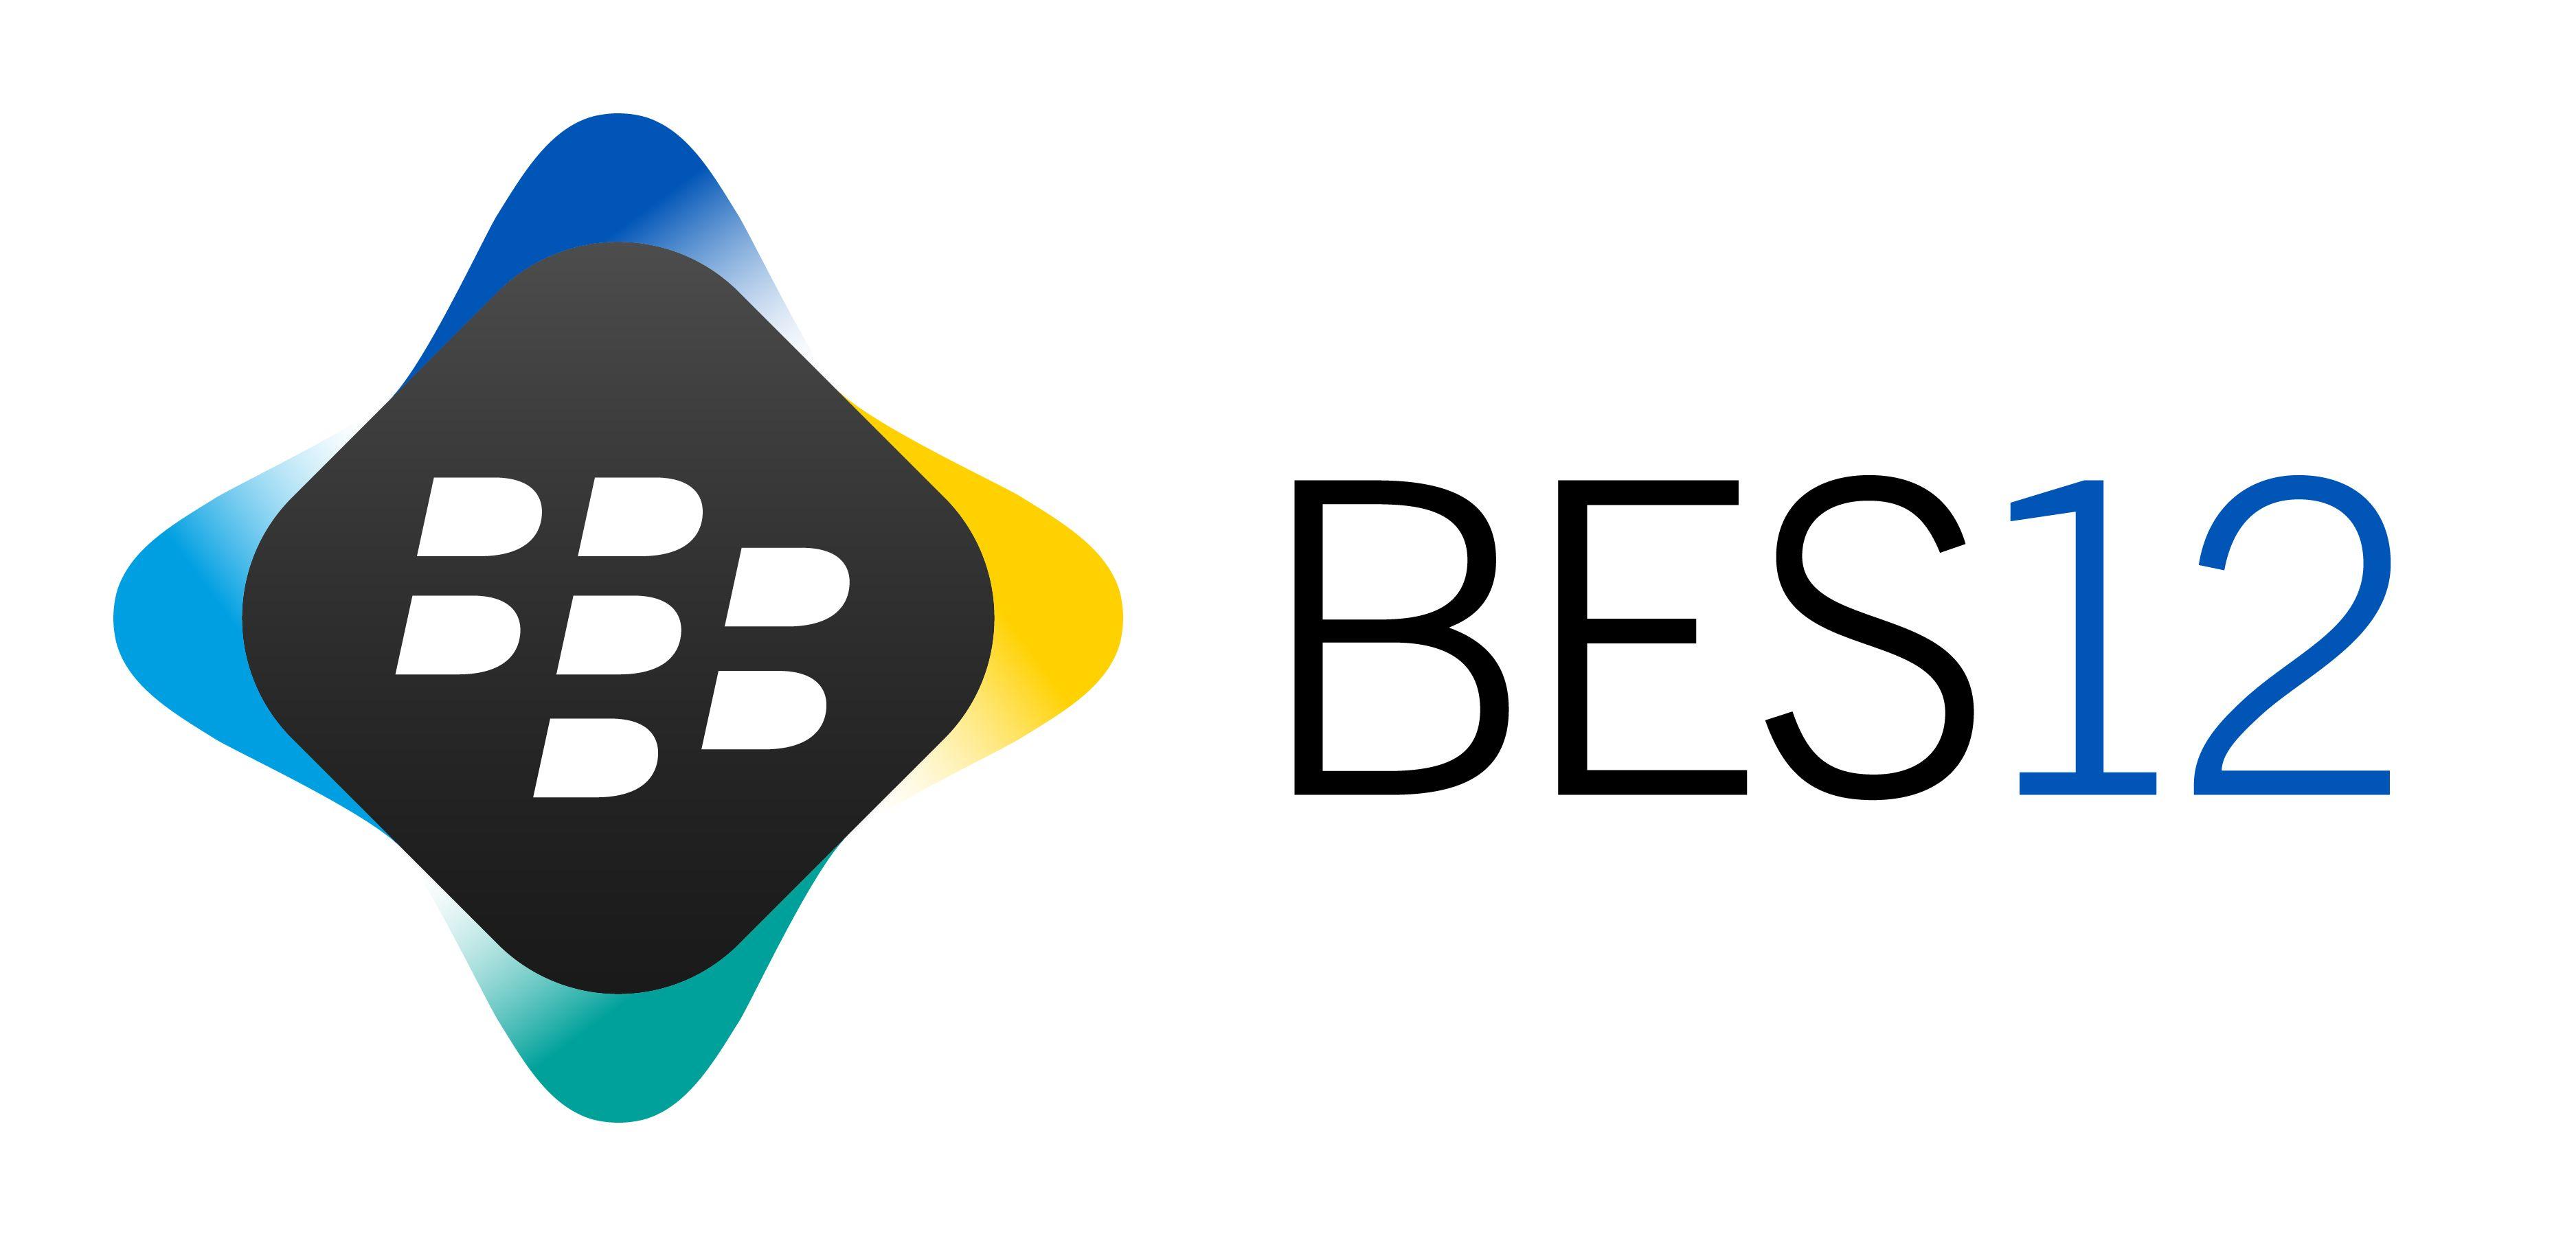 BlackBerry OS Logo - BES12 Version 12.2 Arrives With Enhanced Multi OS Support. Inside